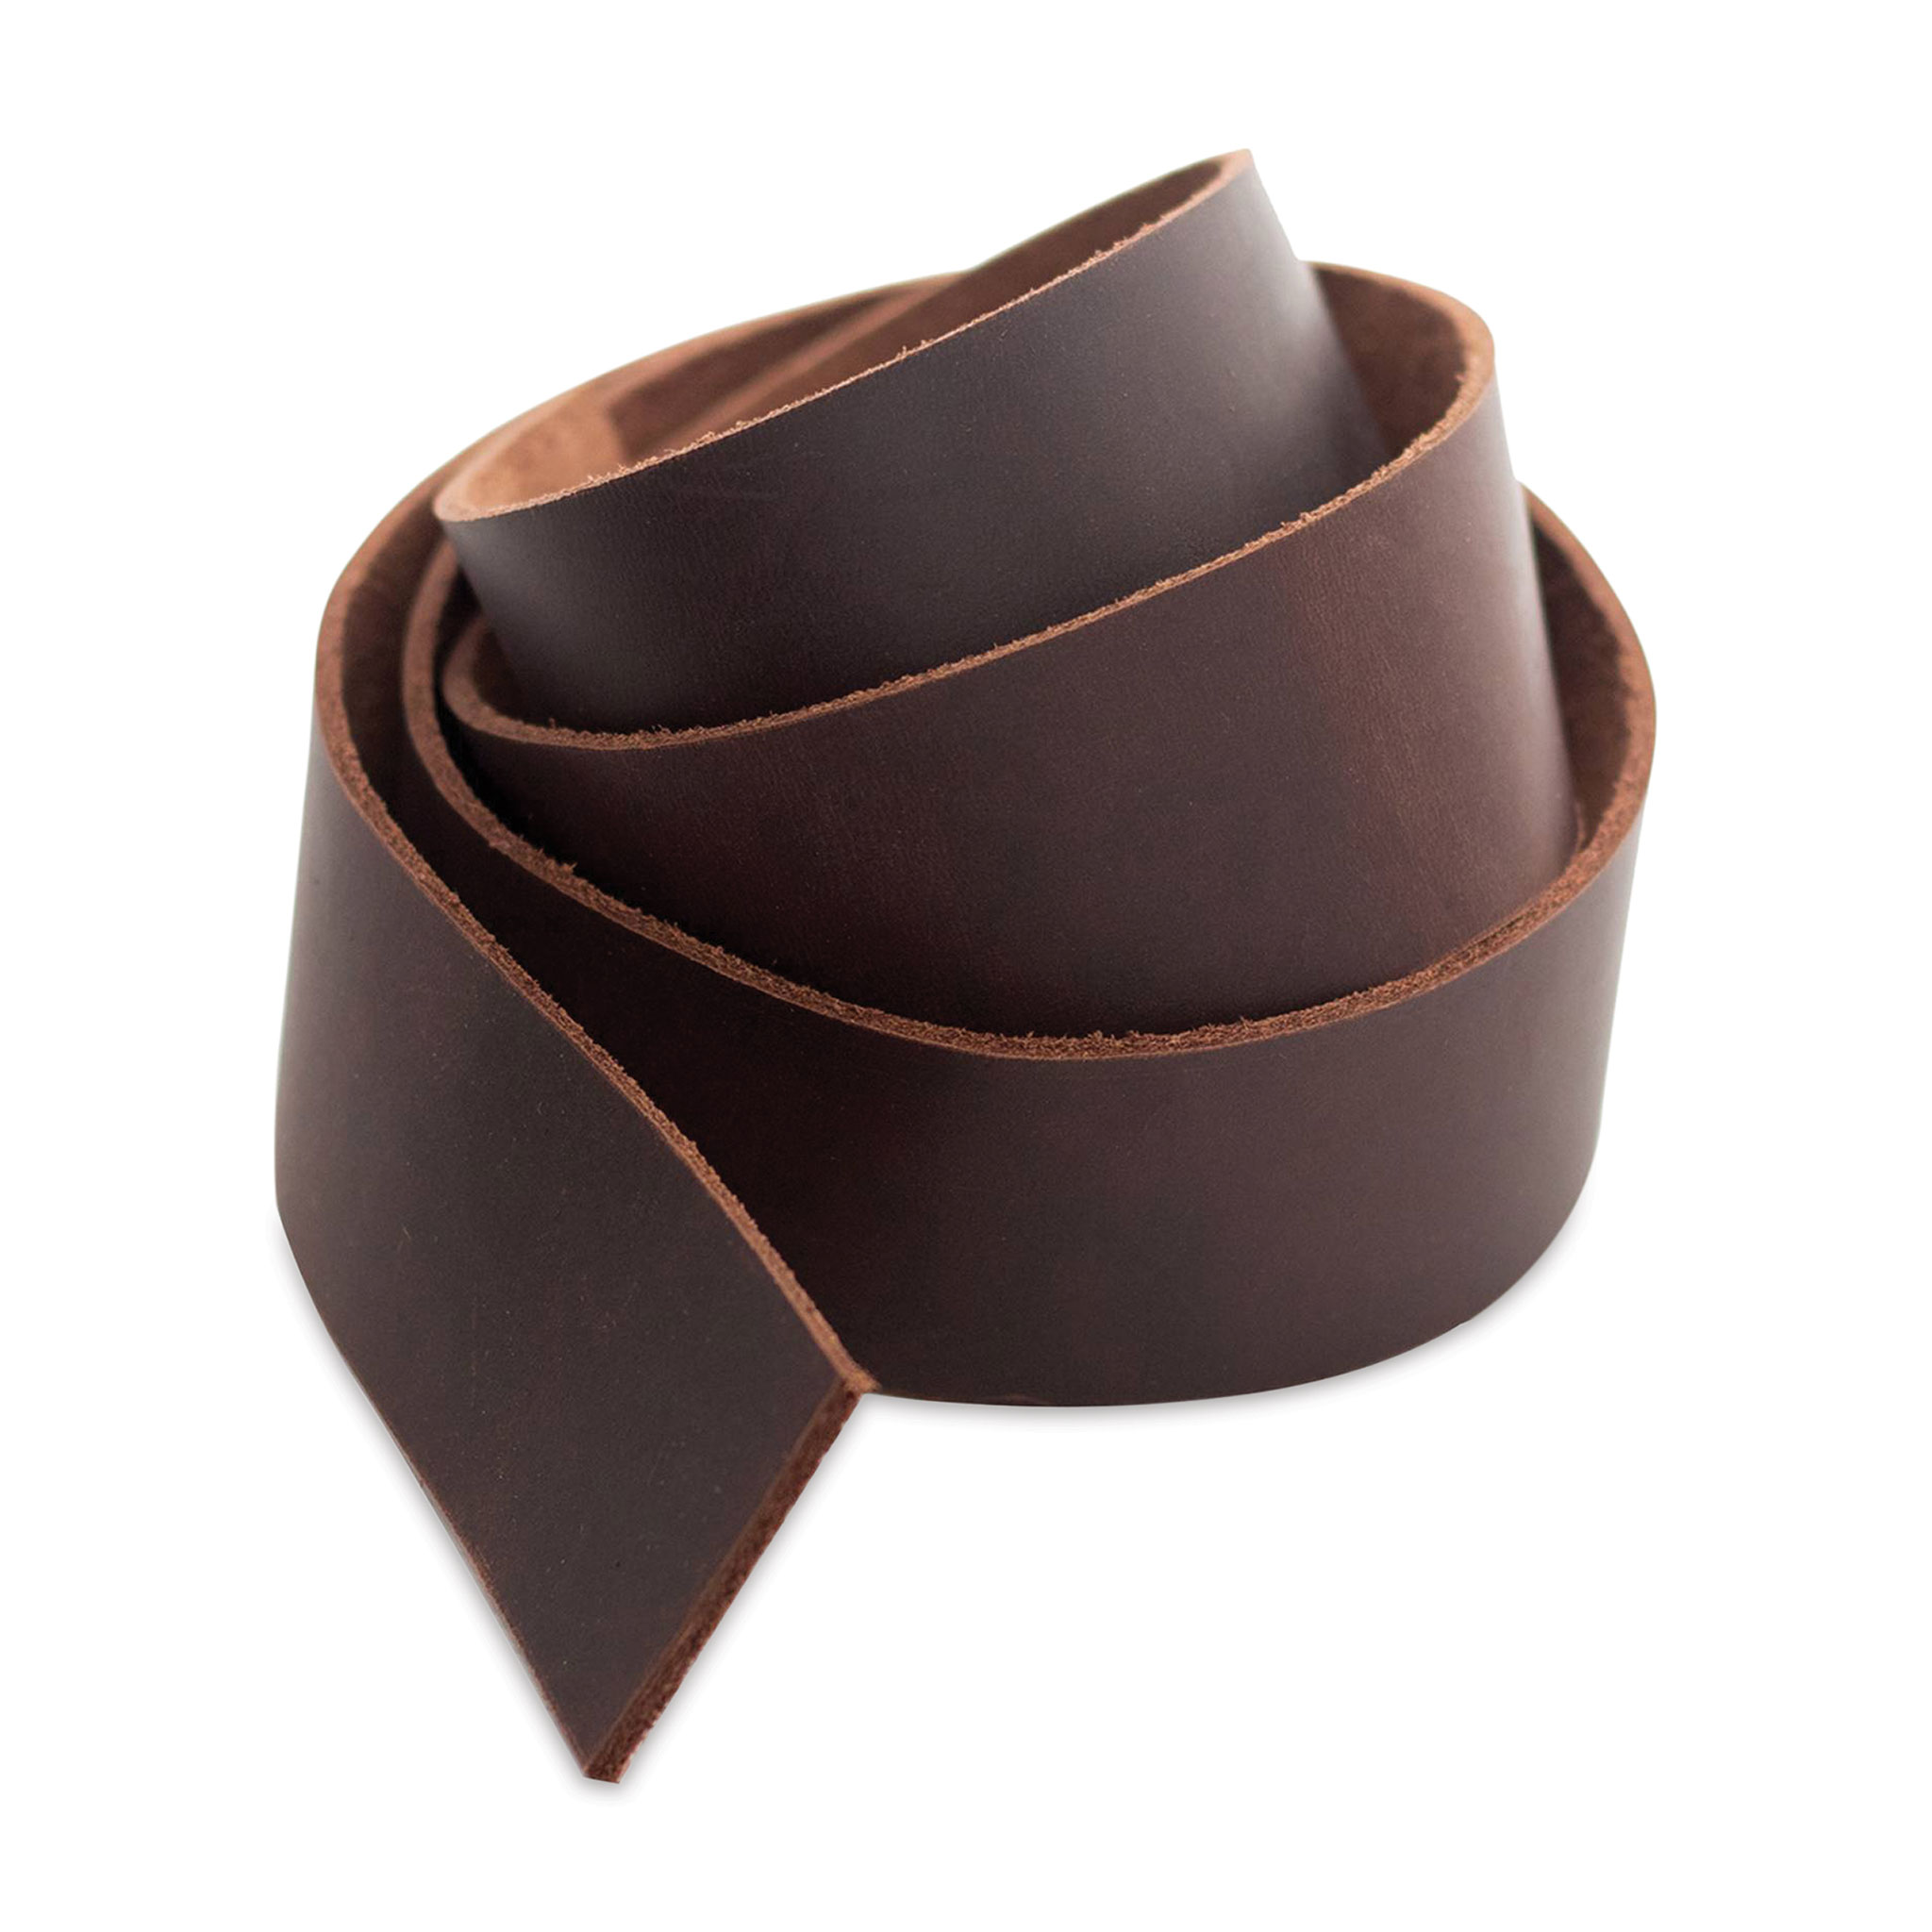 Realeather Leather Strip - Dark Acorn, 3/4 x 48